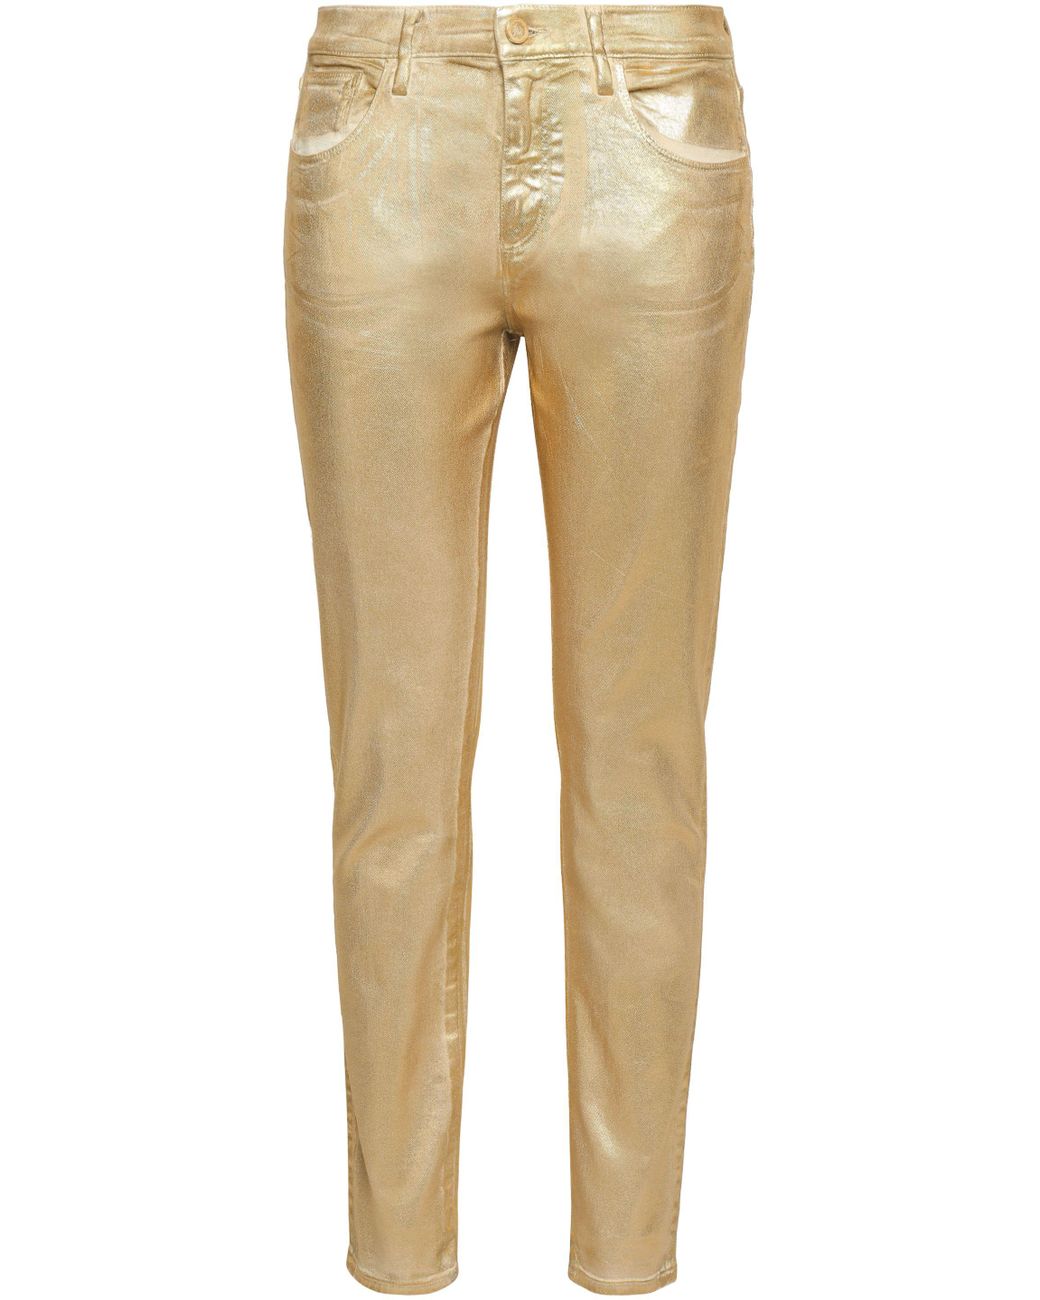 Roberto Cavalli Metallic High-rise Slim-leg Jeans Gold in Metallic - Lyst